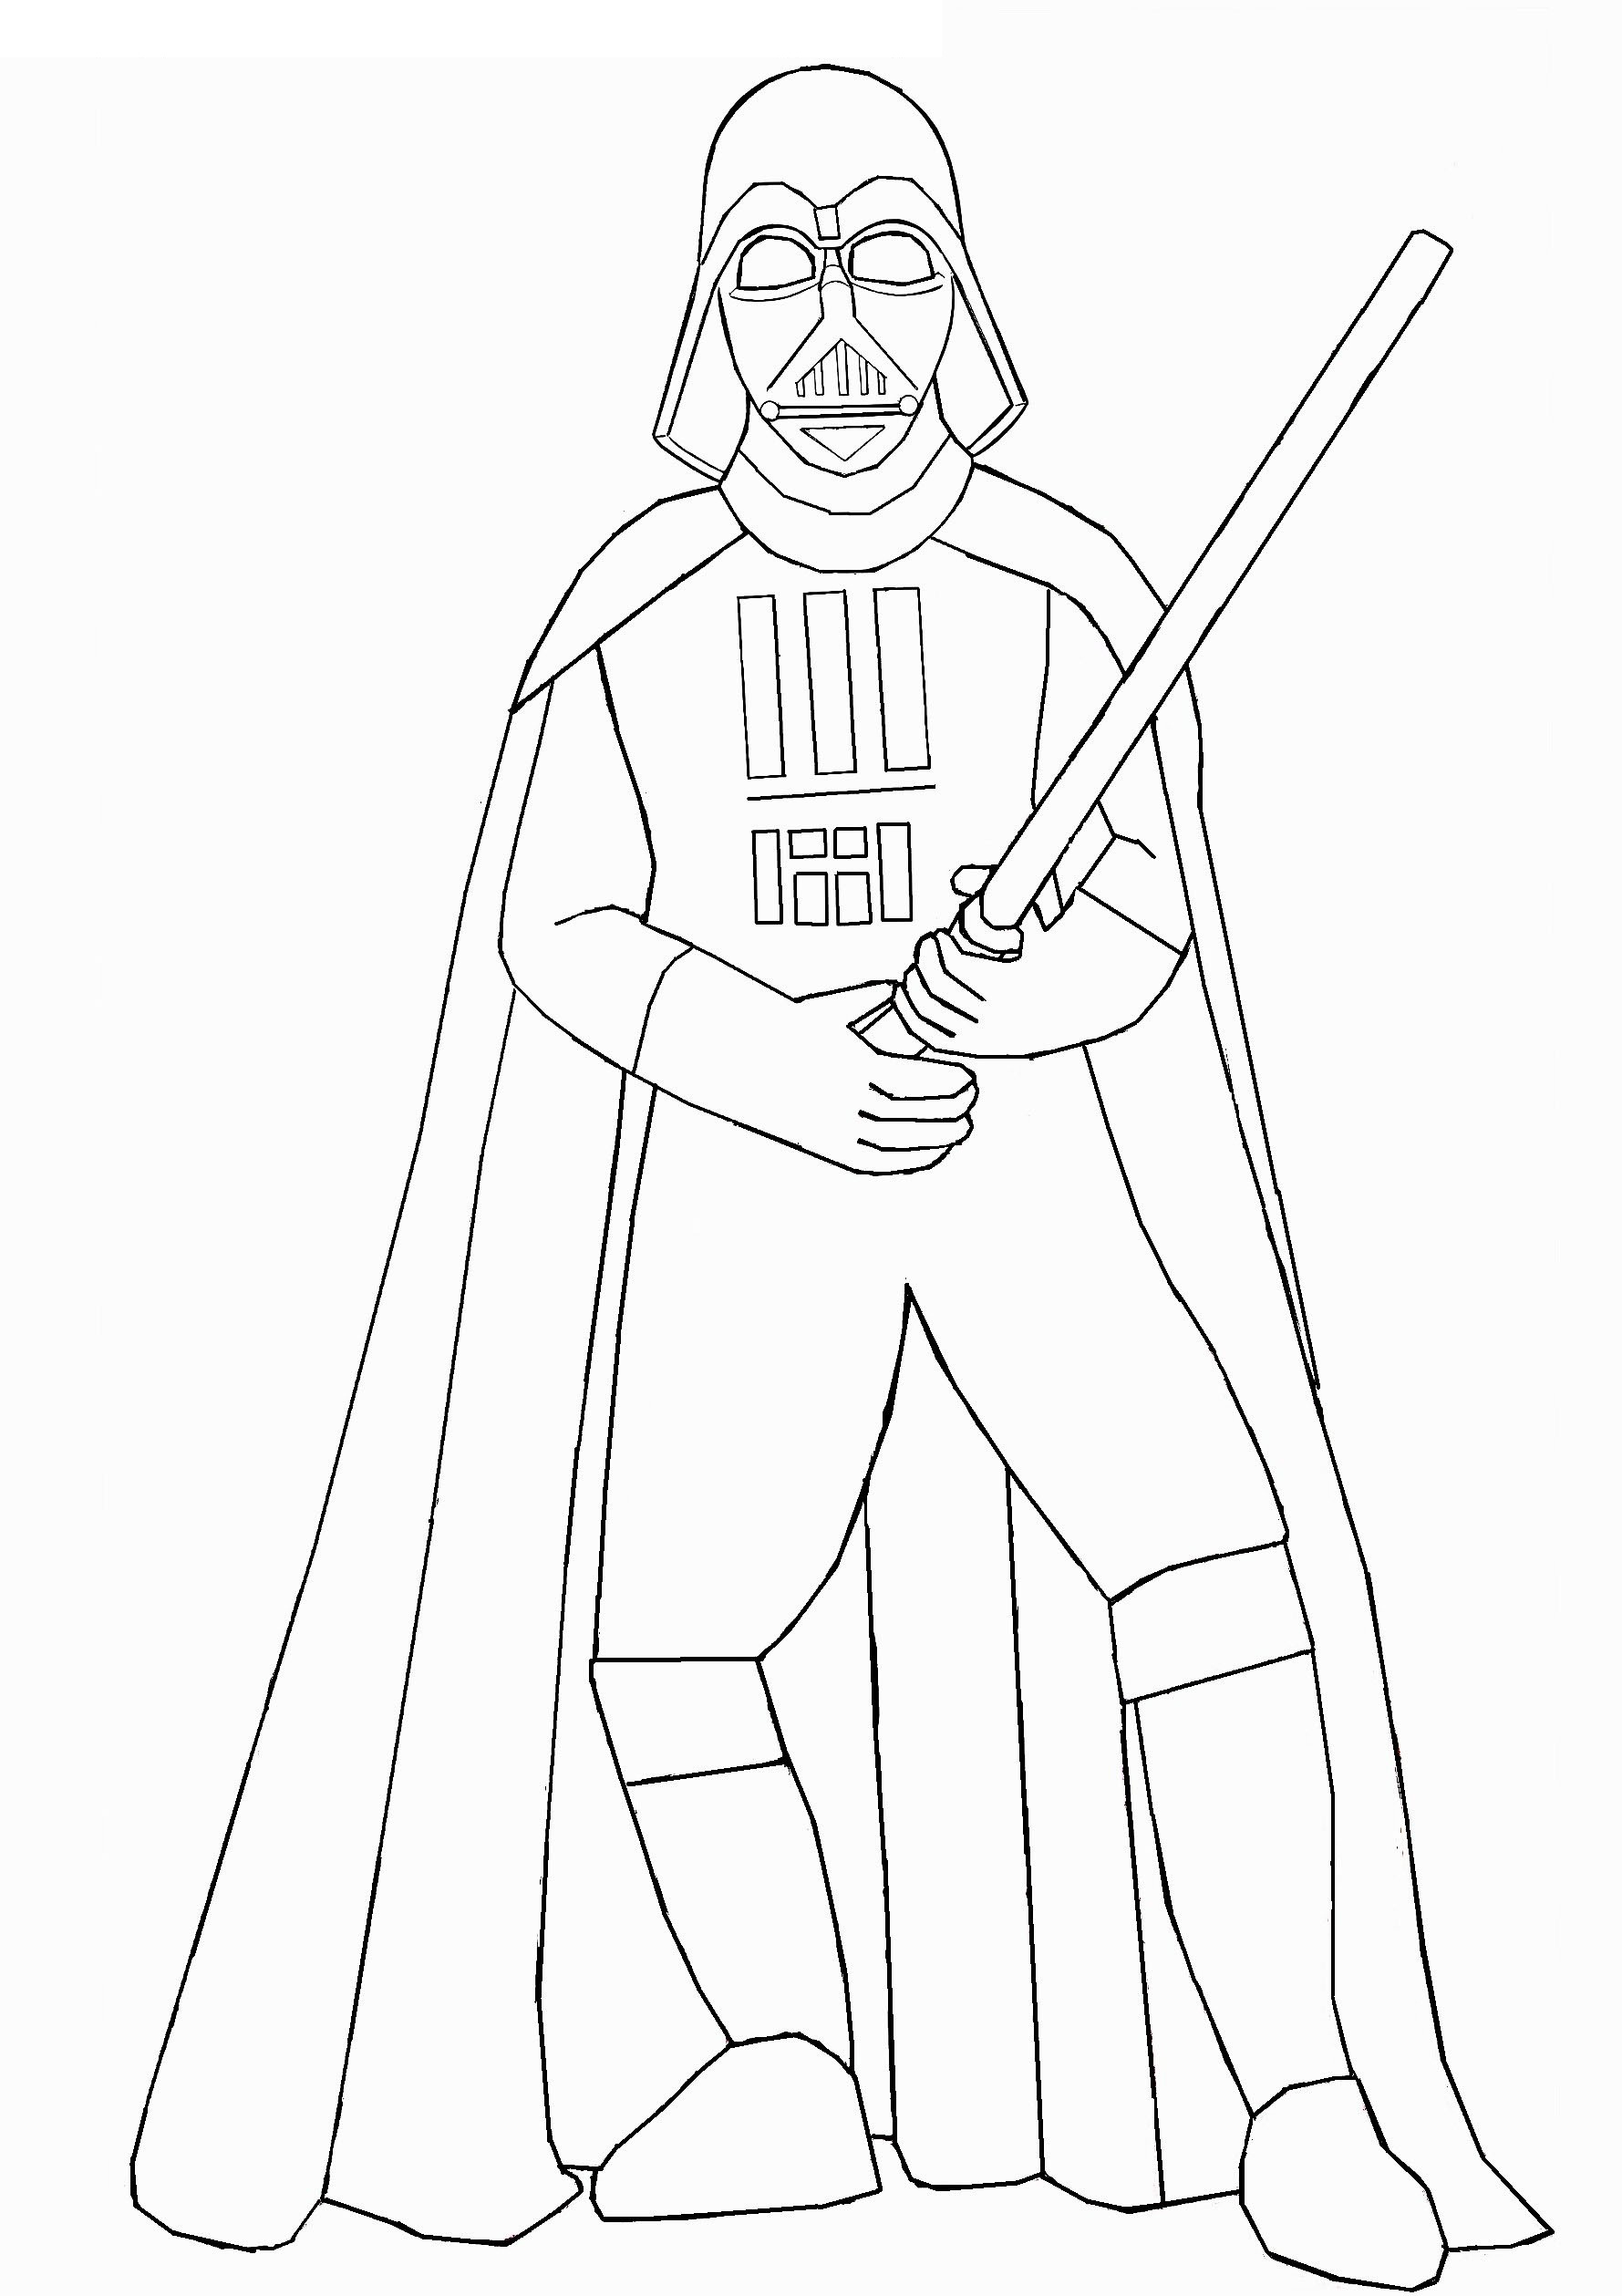 Darth Vader Holding Lightsaber Coloring Page